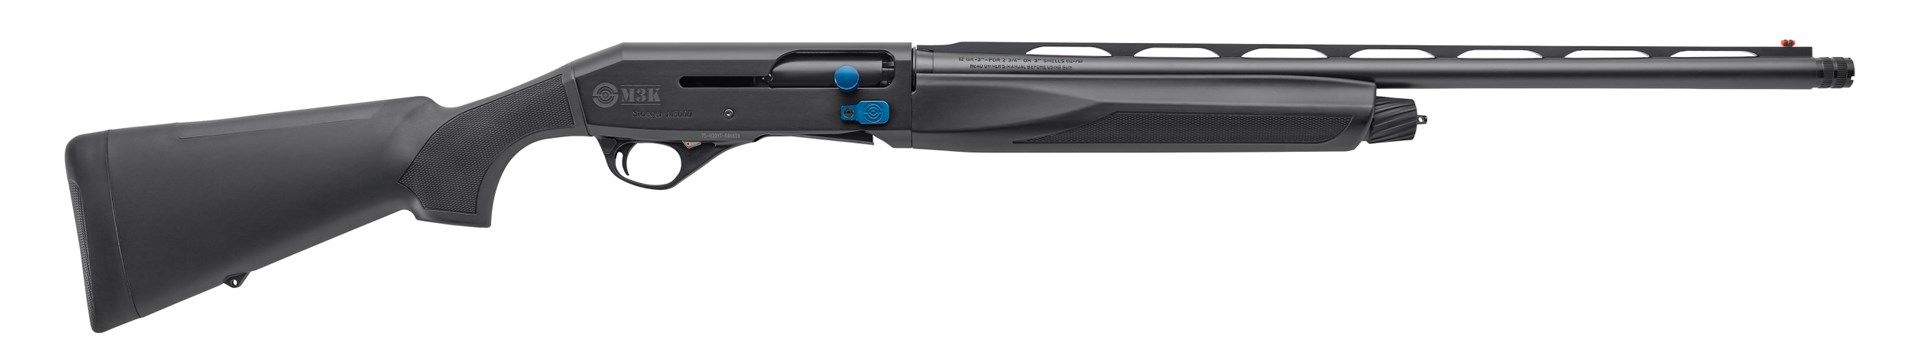 right-side view stoeger m3k 3-gun shotgun 12 gauge semi-automatic black gun blue accents controls